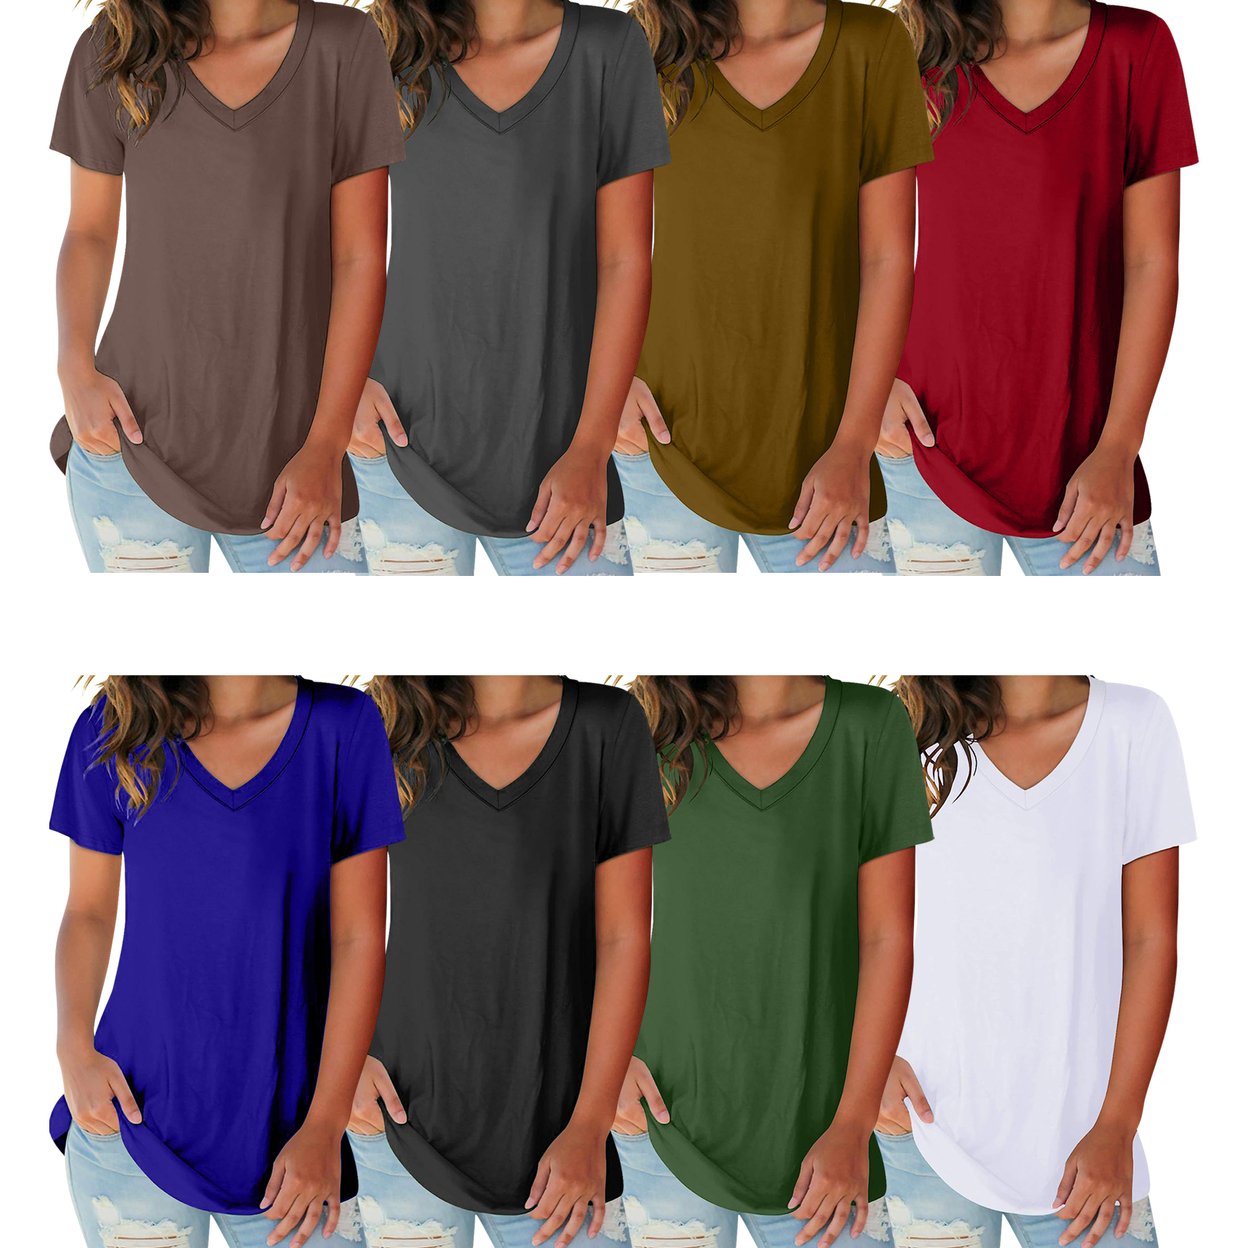 3-Pack: Women's Ultra Soft Smooth Cotton Blend Basic V-Neck Short Sleeve Shirts - Black, White, Grey, Small